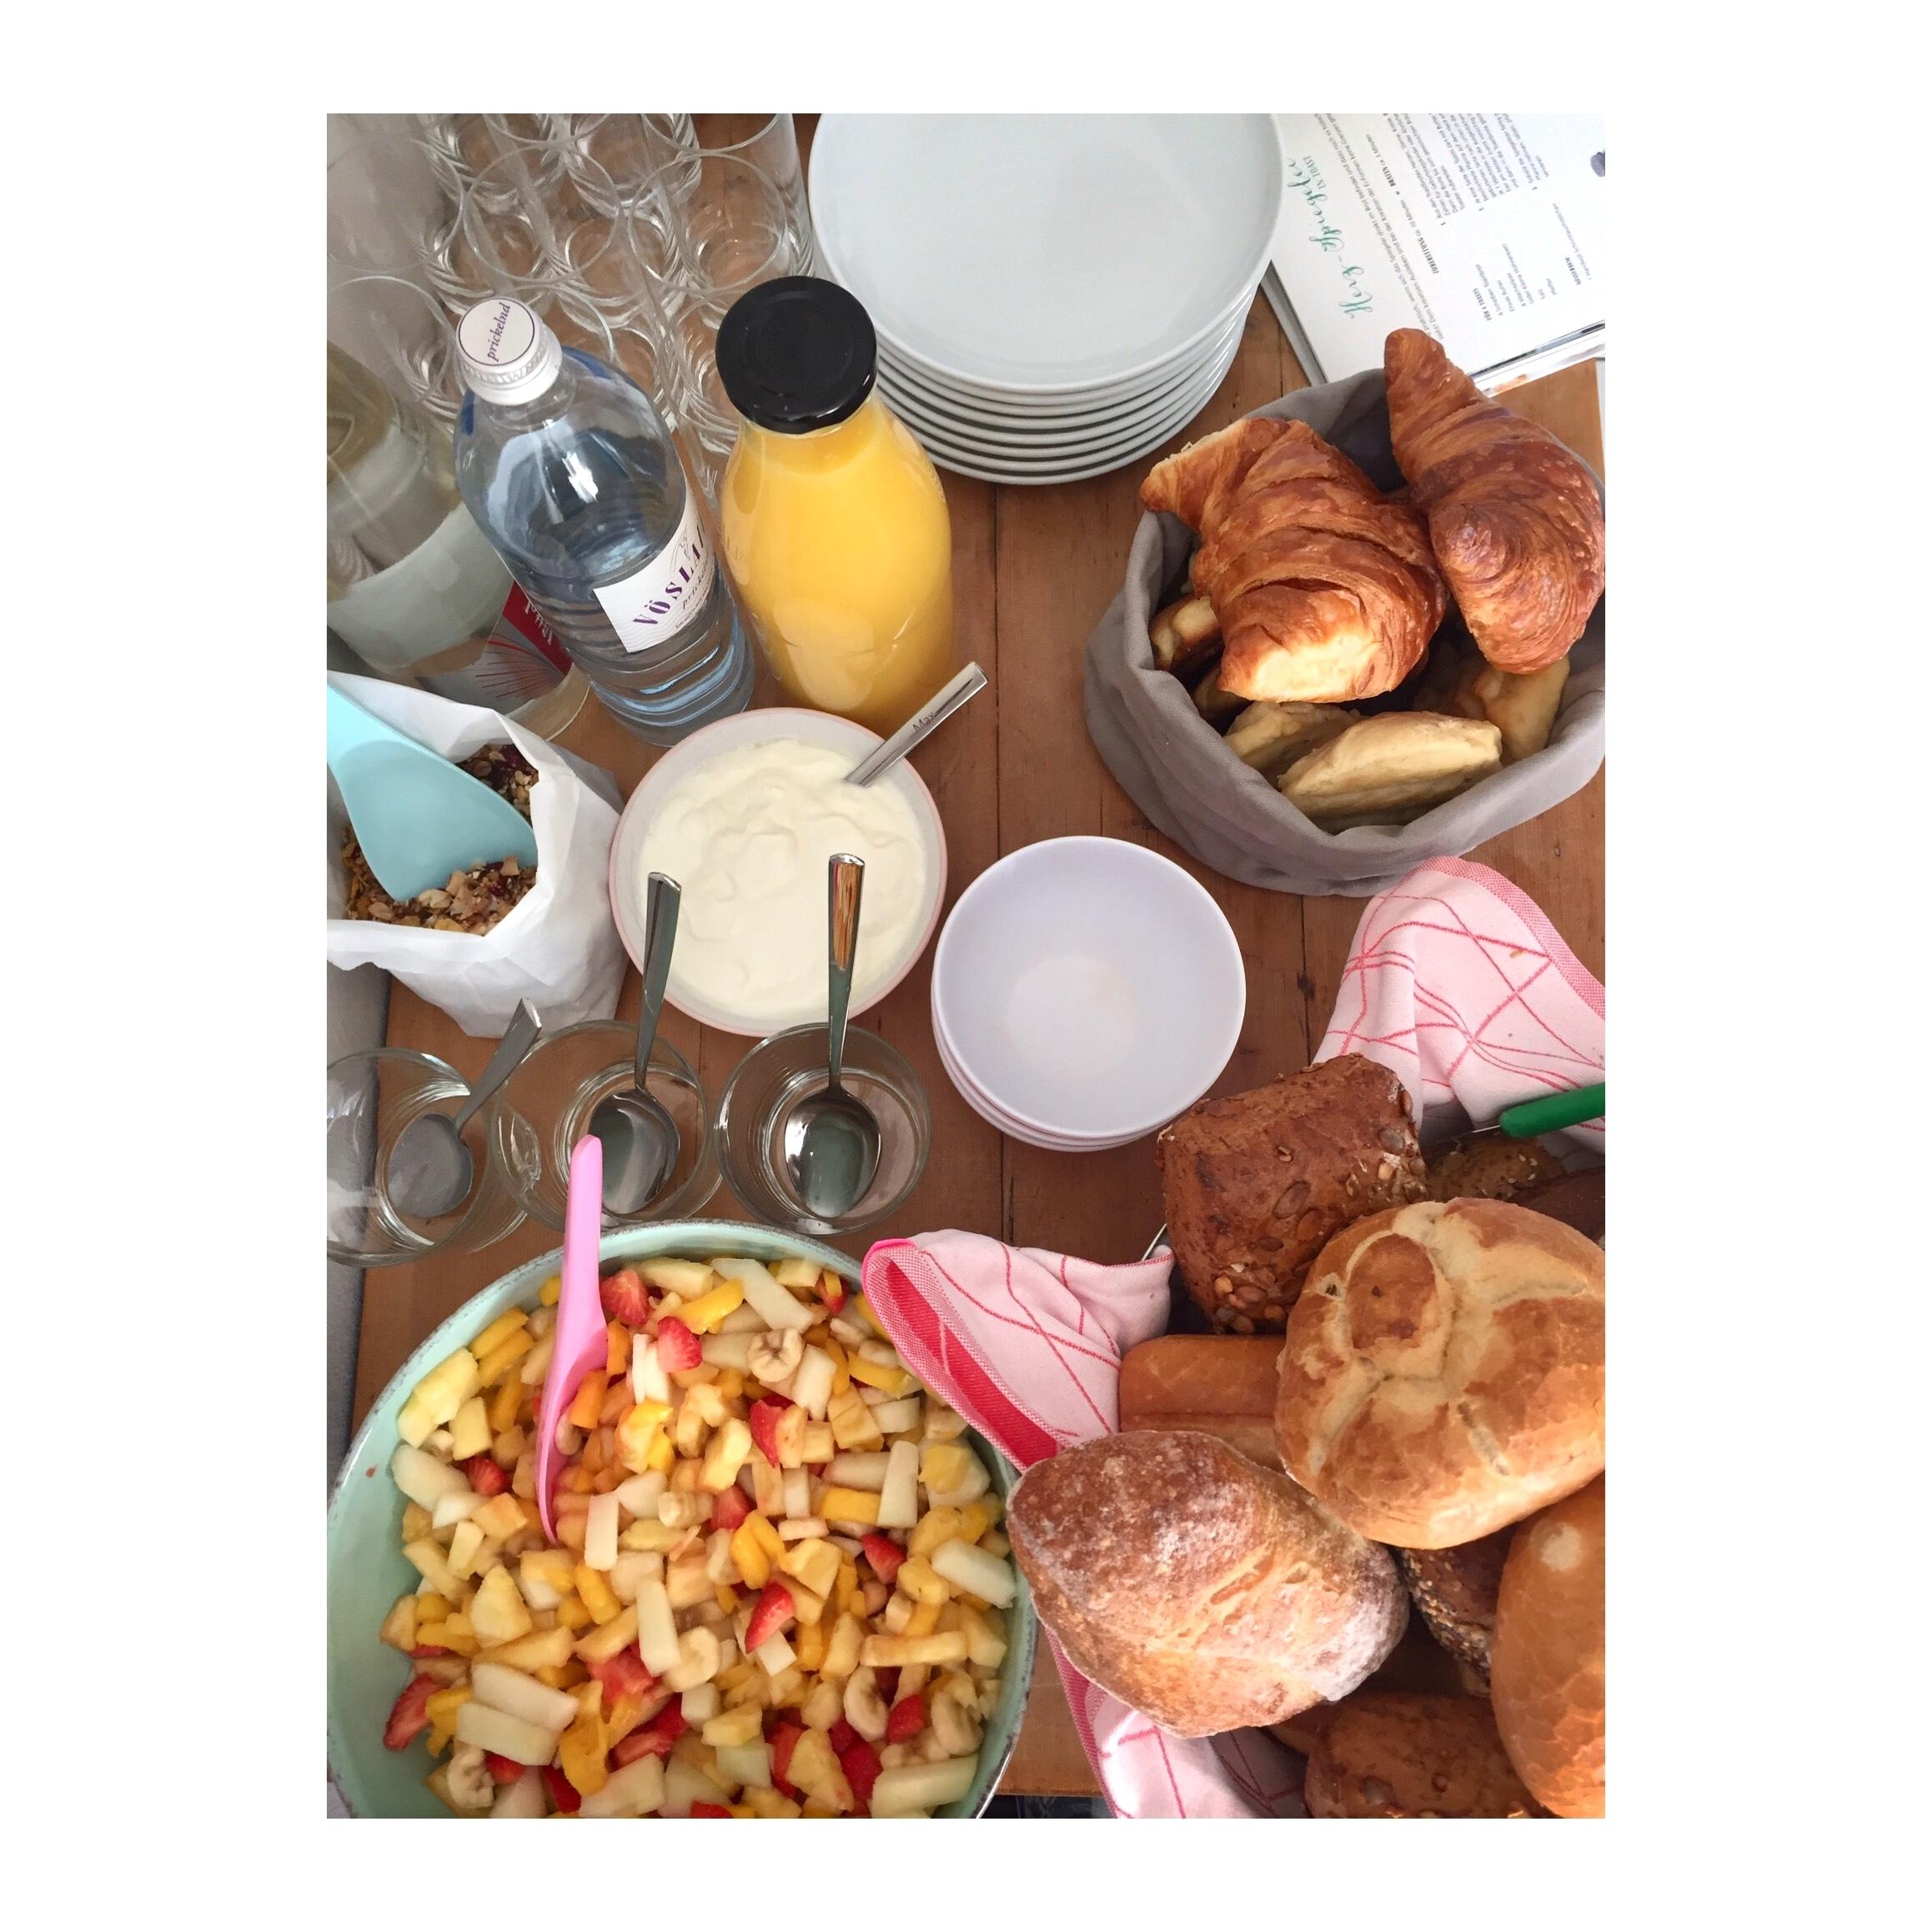 Frühstück ist doch immer wieder was Feines 

#frühstück #brunch #lecker #weekend